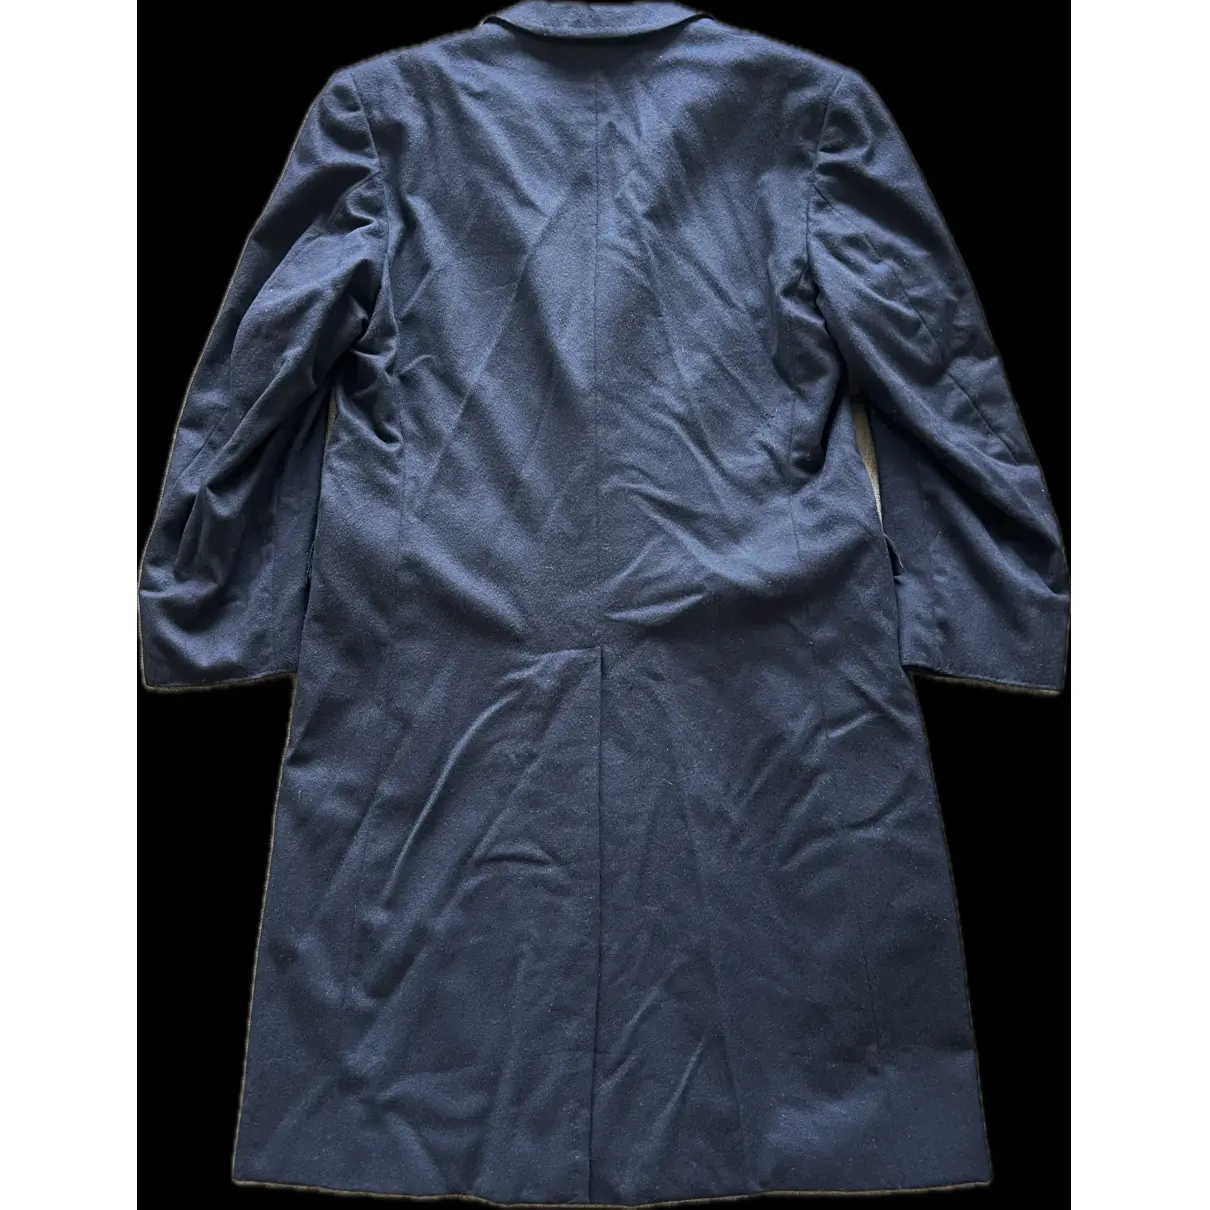 Buy Piacenza 1733 Cashmere coat online